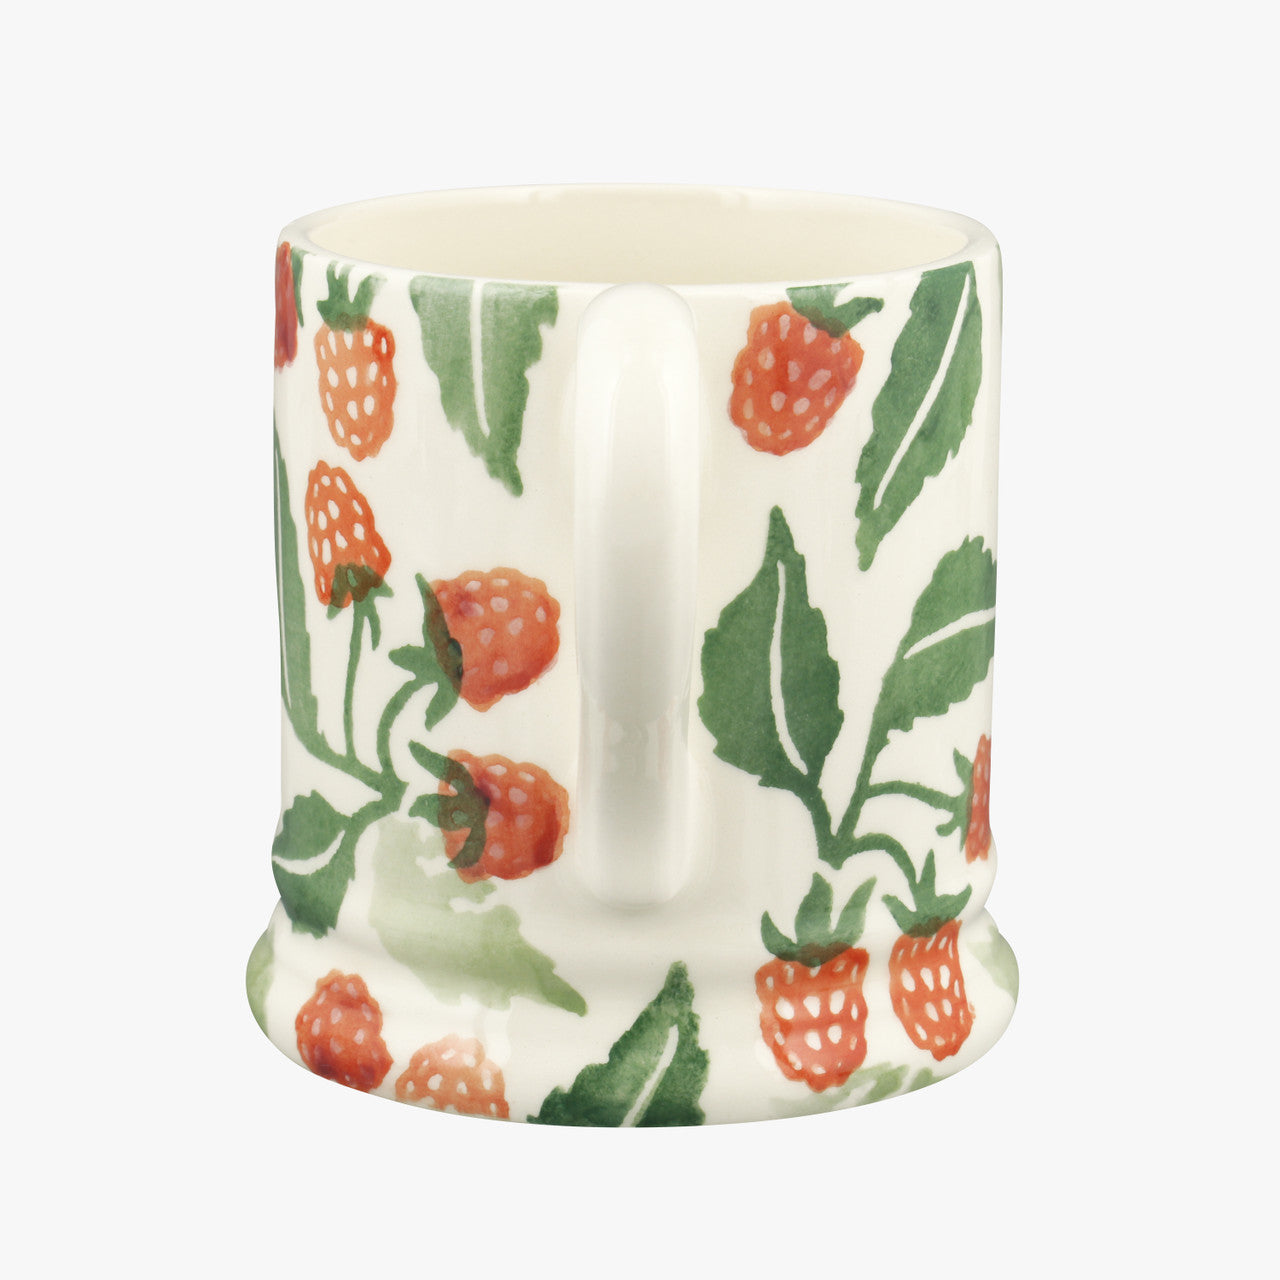 Raspberries 1/2 pint mug by Emma Bridgewater.